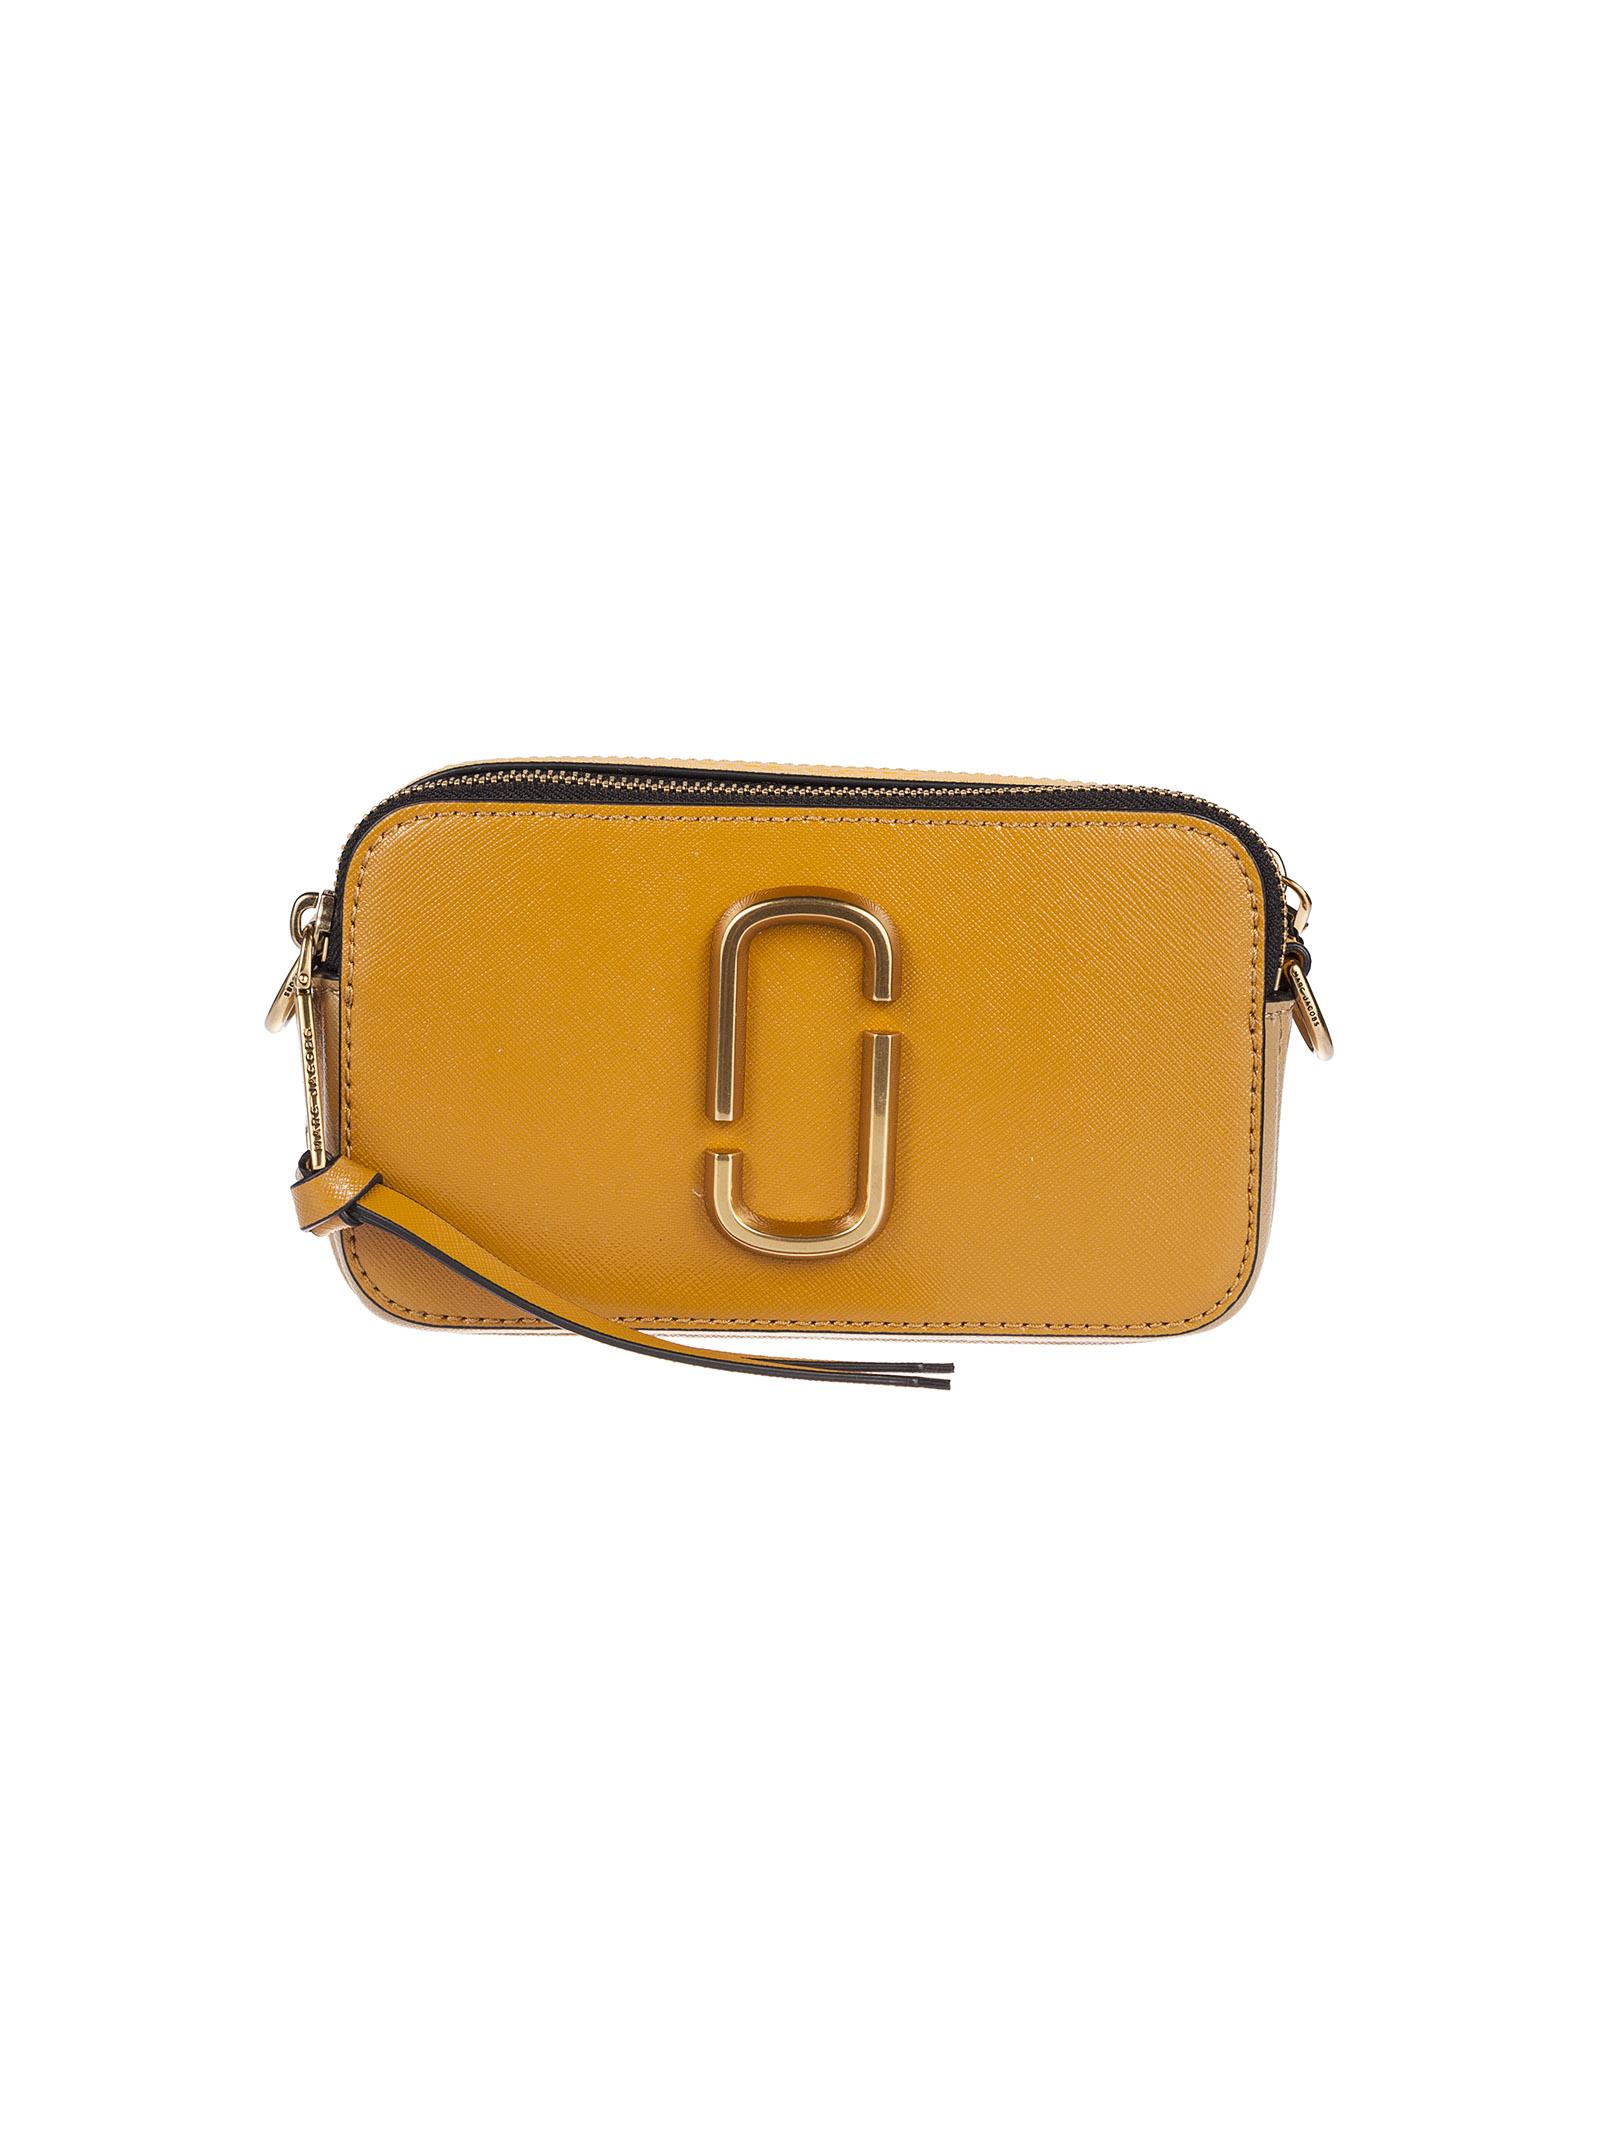 Marc Jacobs Snapshot Shoulder Bag In Mustard Multi | ModeSens